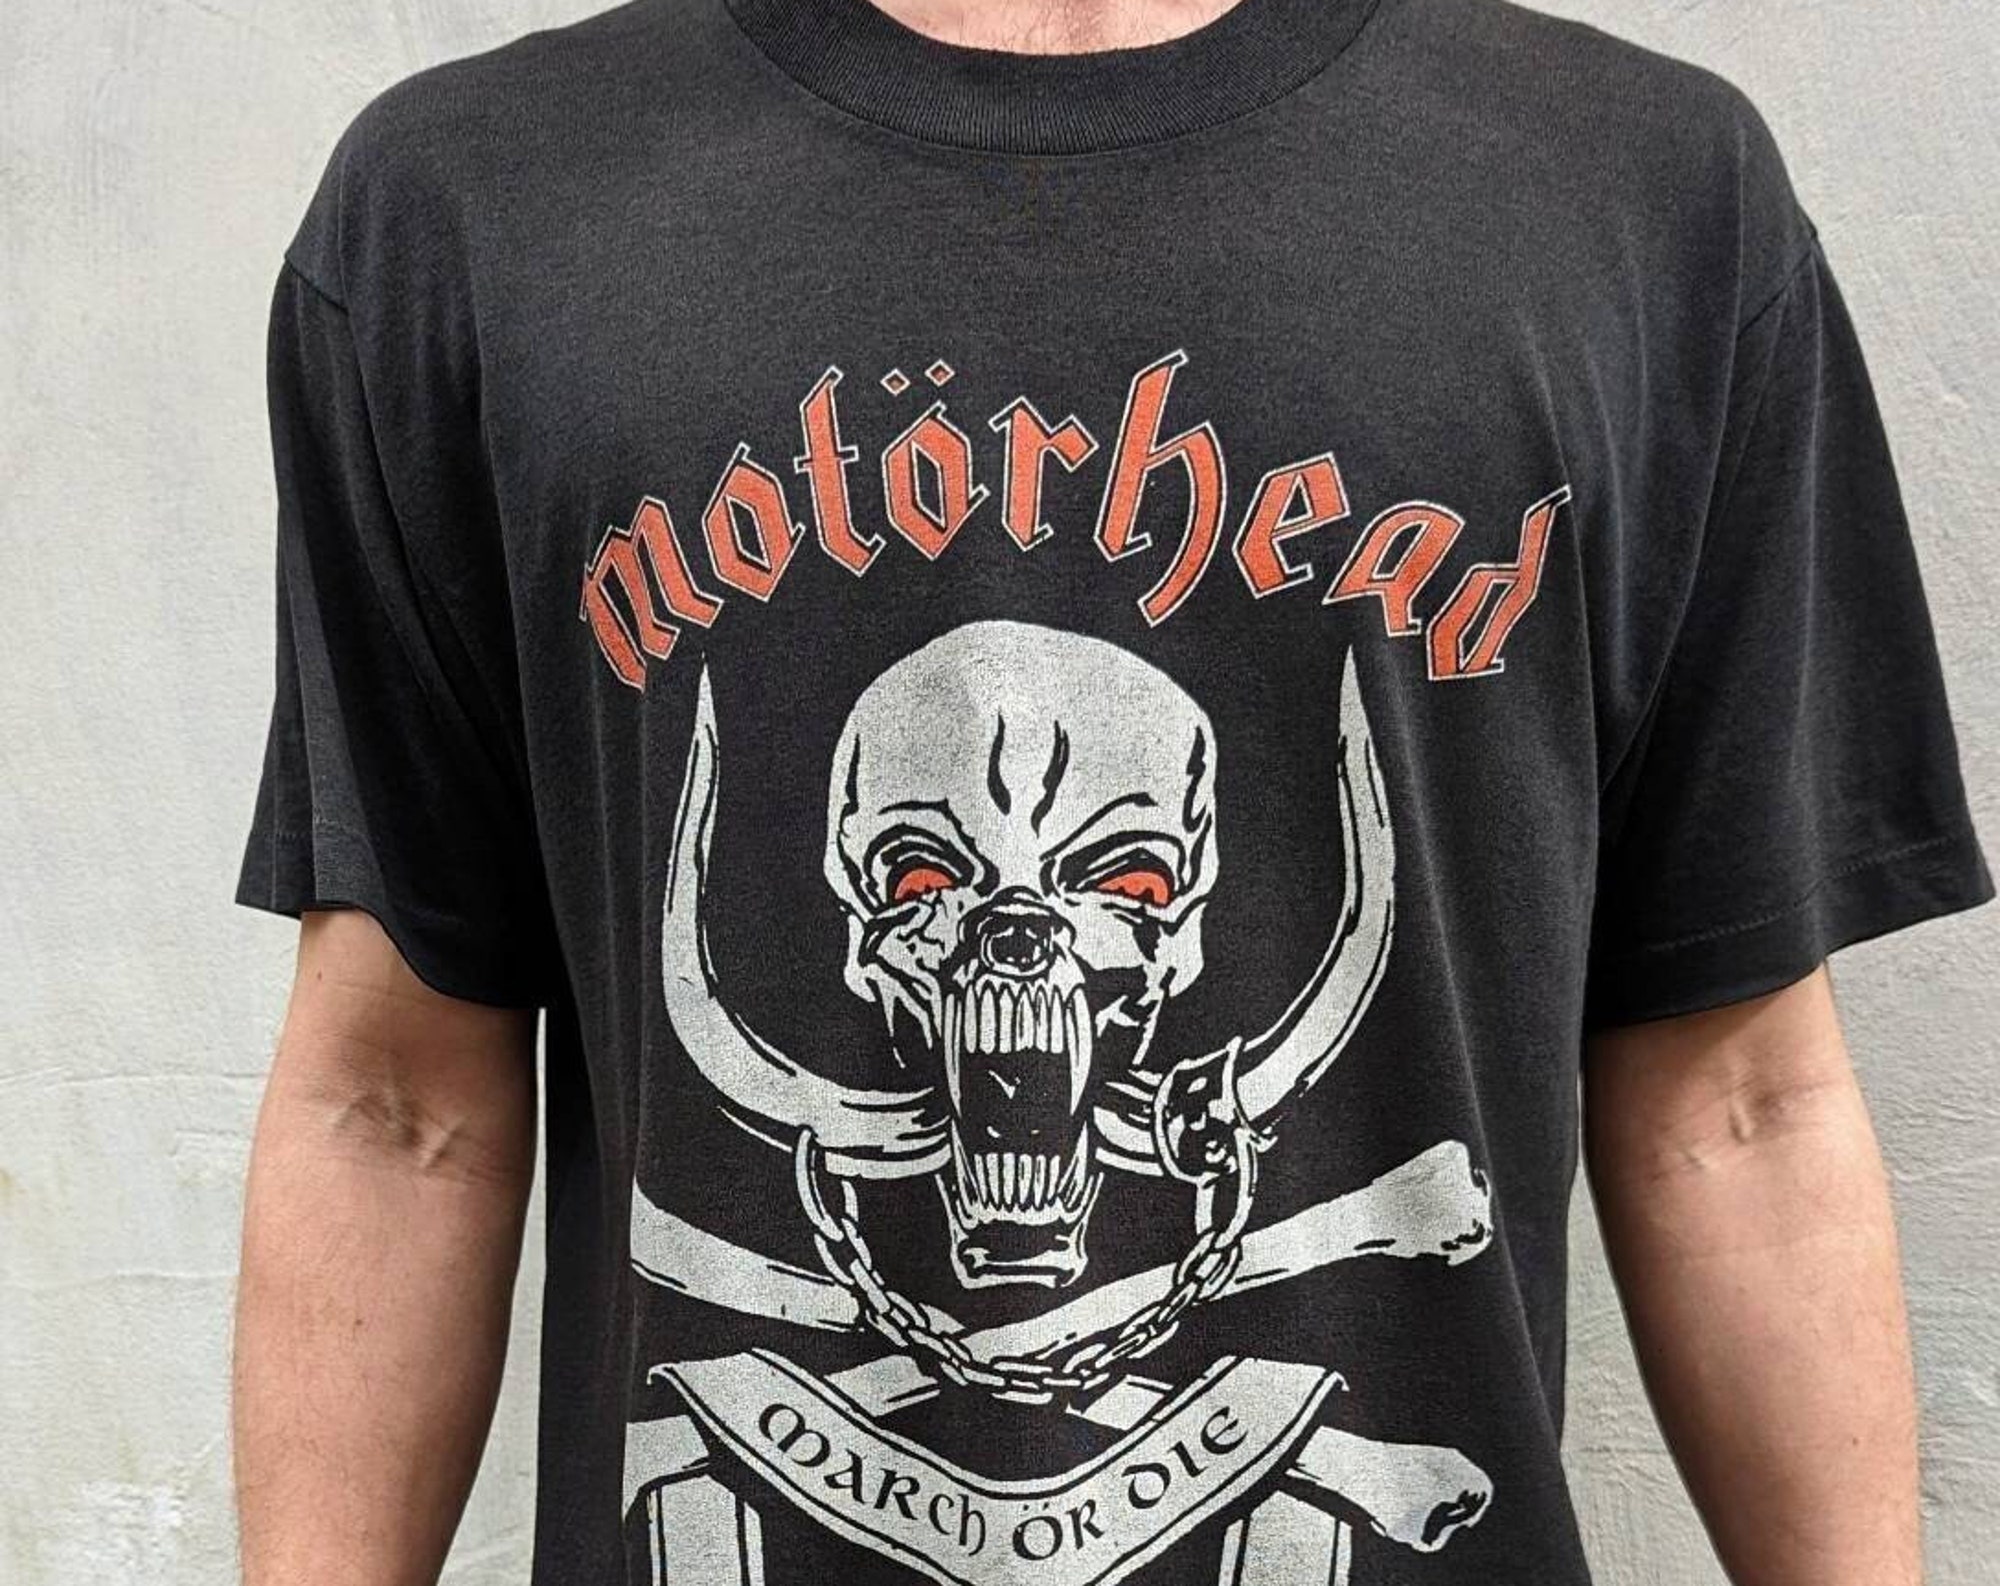 Discover Vintage 1992 Motorhead  T-Shirt March or Die Concert Tour Lemmy Kilmister Saxon Band Merch